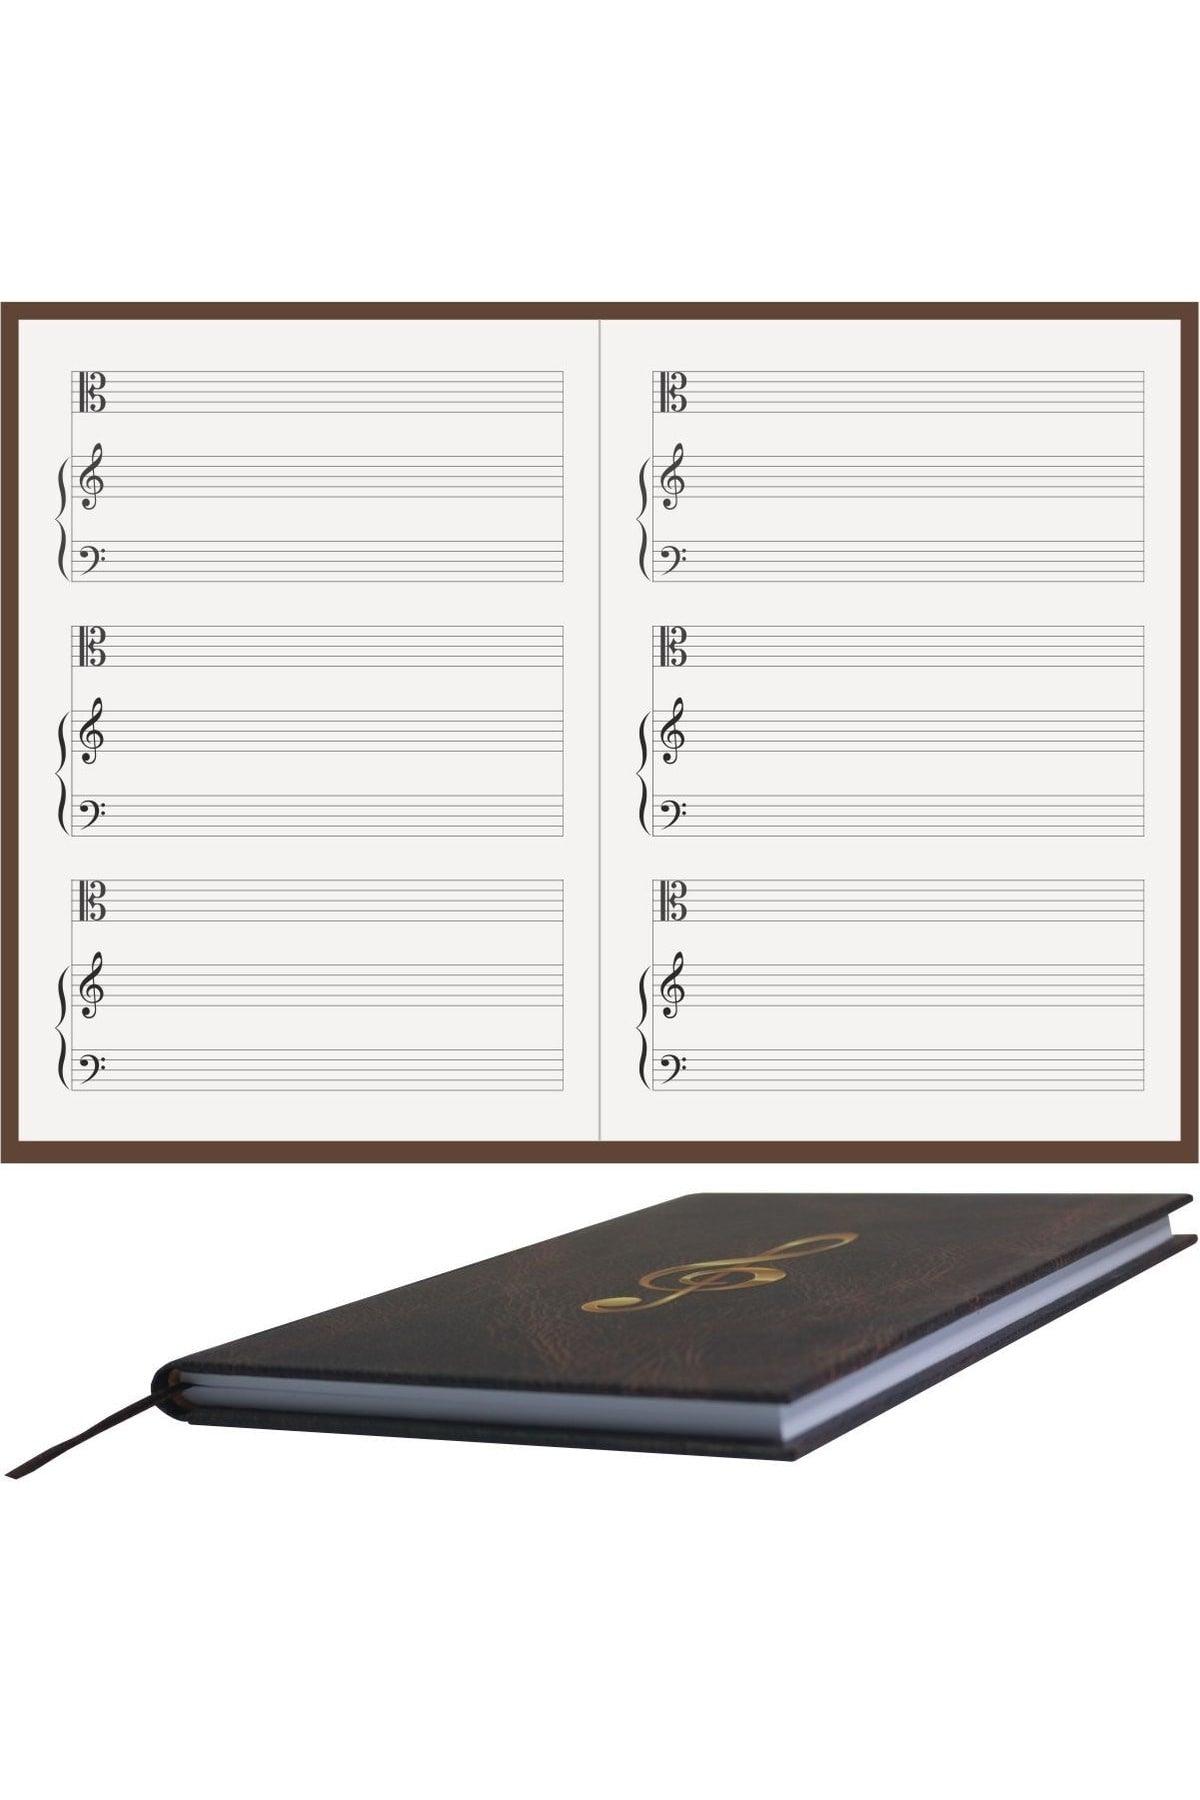 Piano Notebook (do